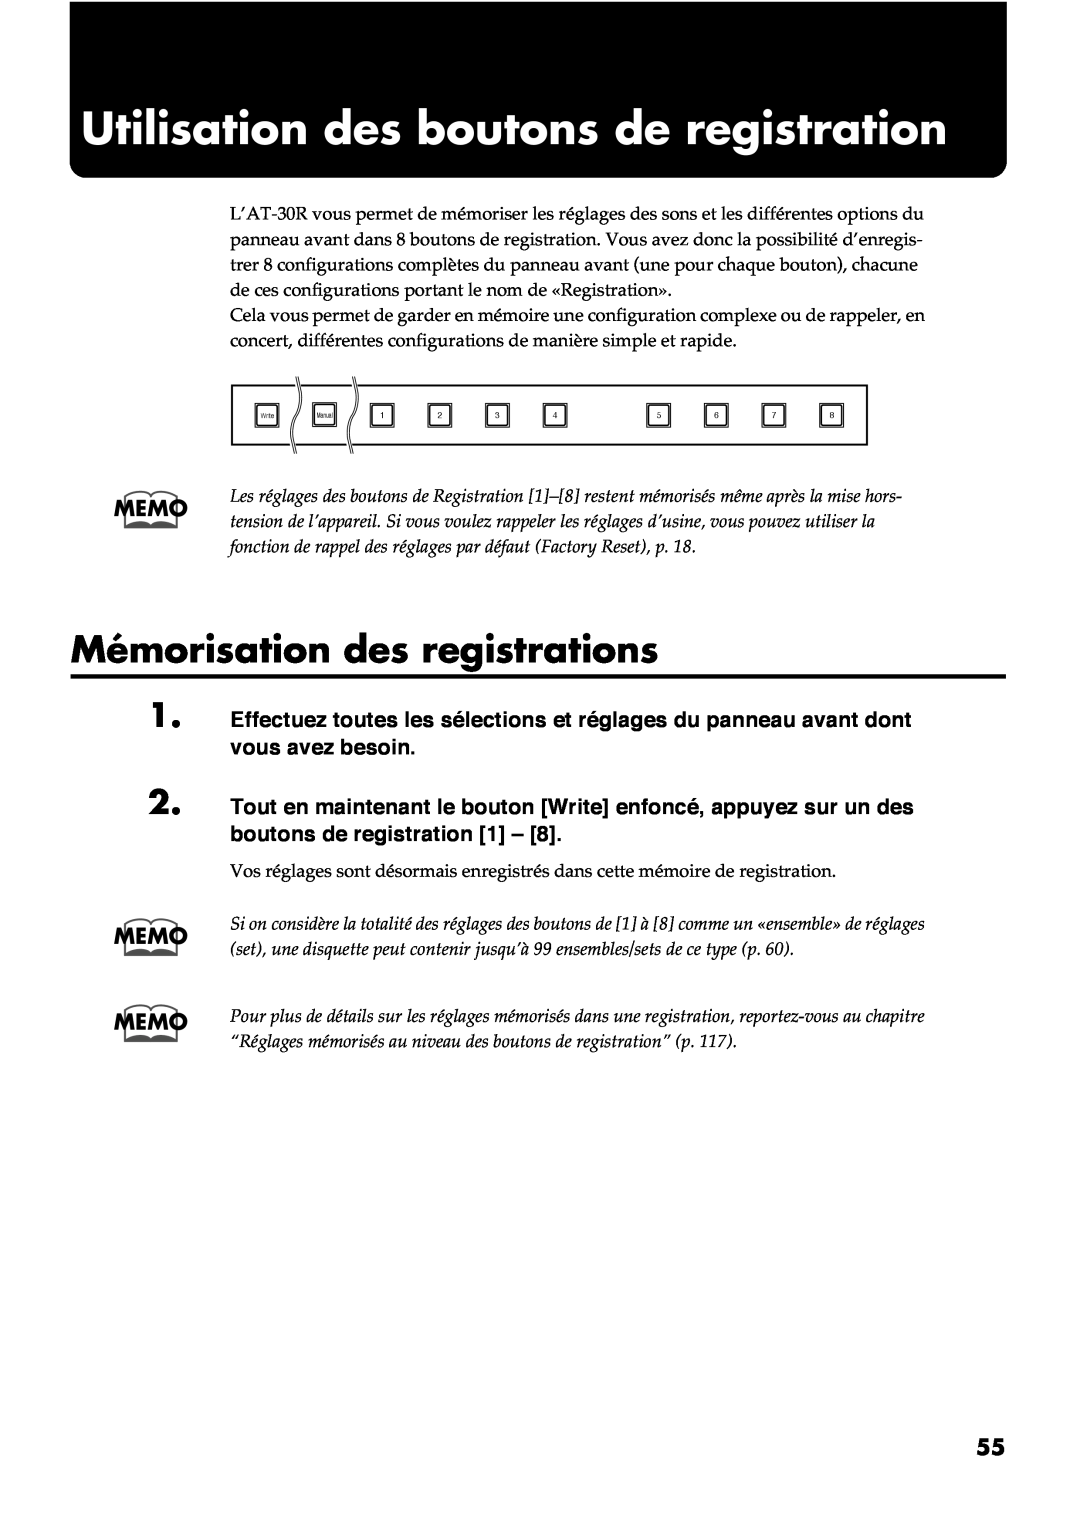 Roland AT30R manual Utilisation des boutons de registration, Mémorisation des registrations, Memo Memo 